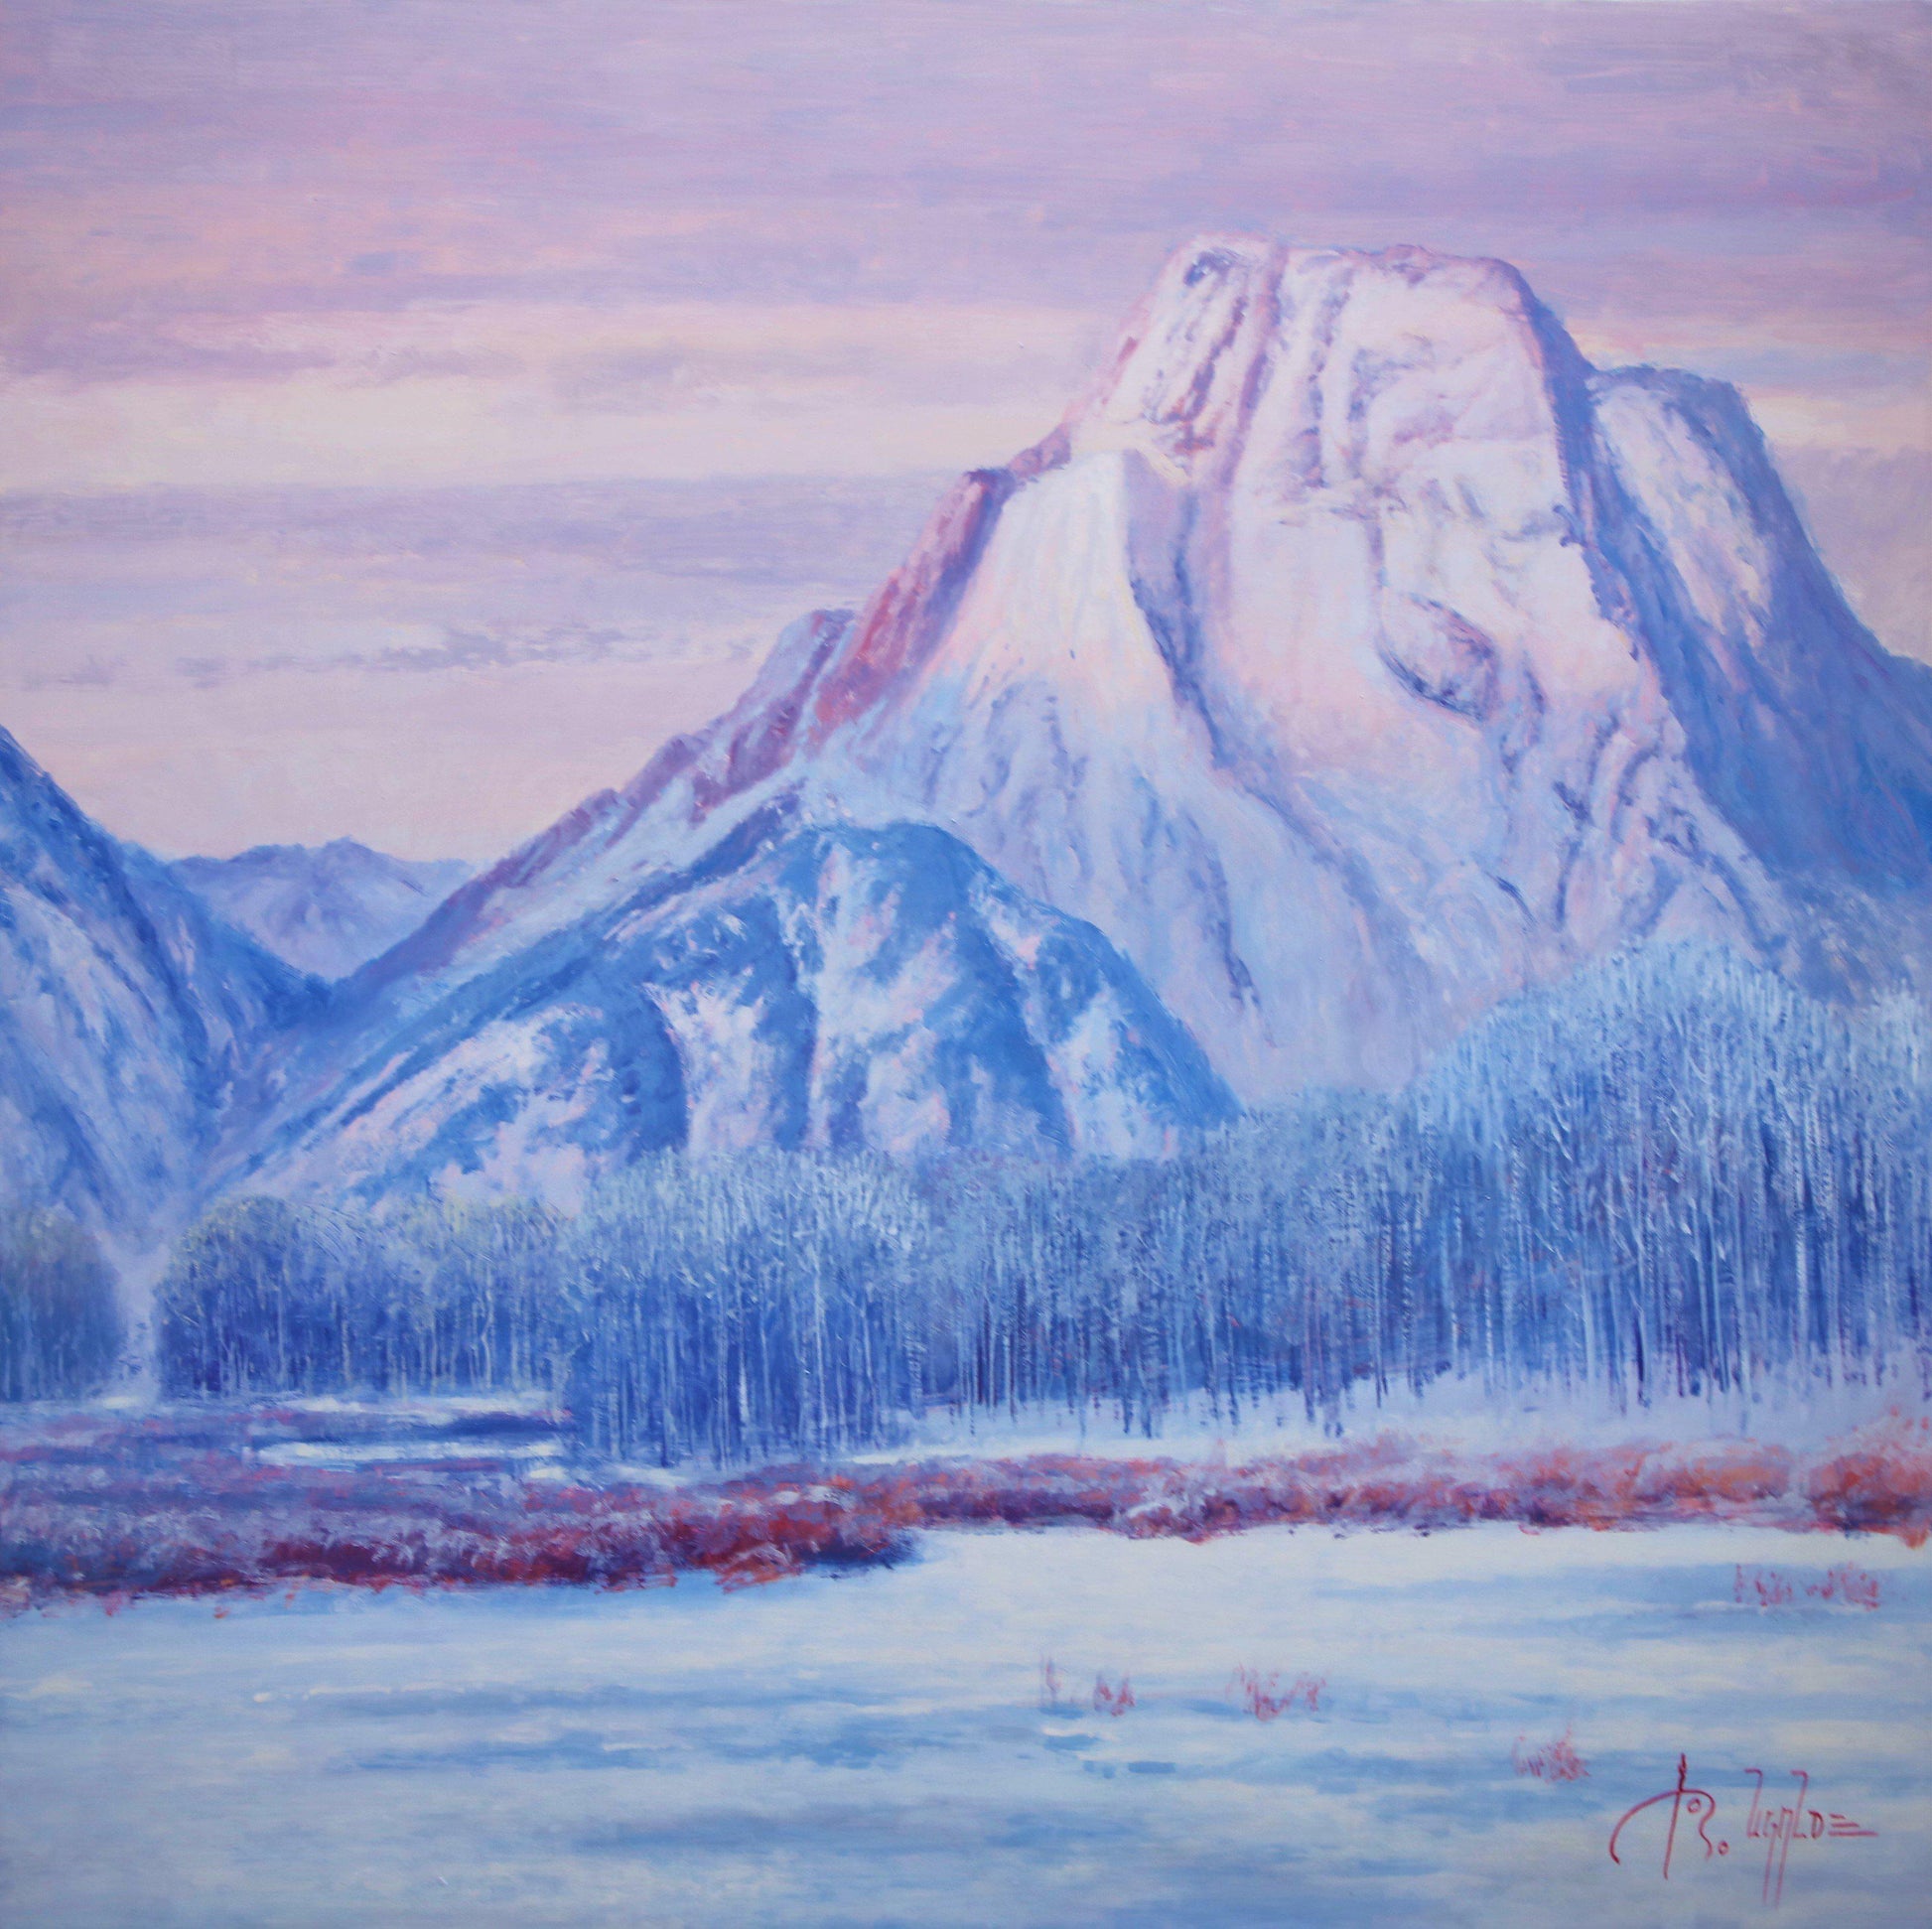 Grand Teton Winter-Painting-Roberto Ugalde-Sorrel Sky Gallery